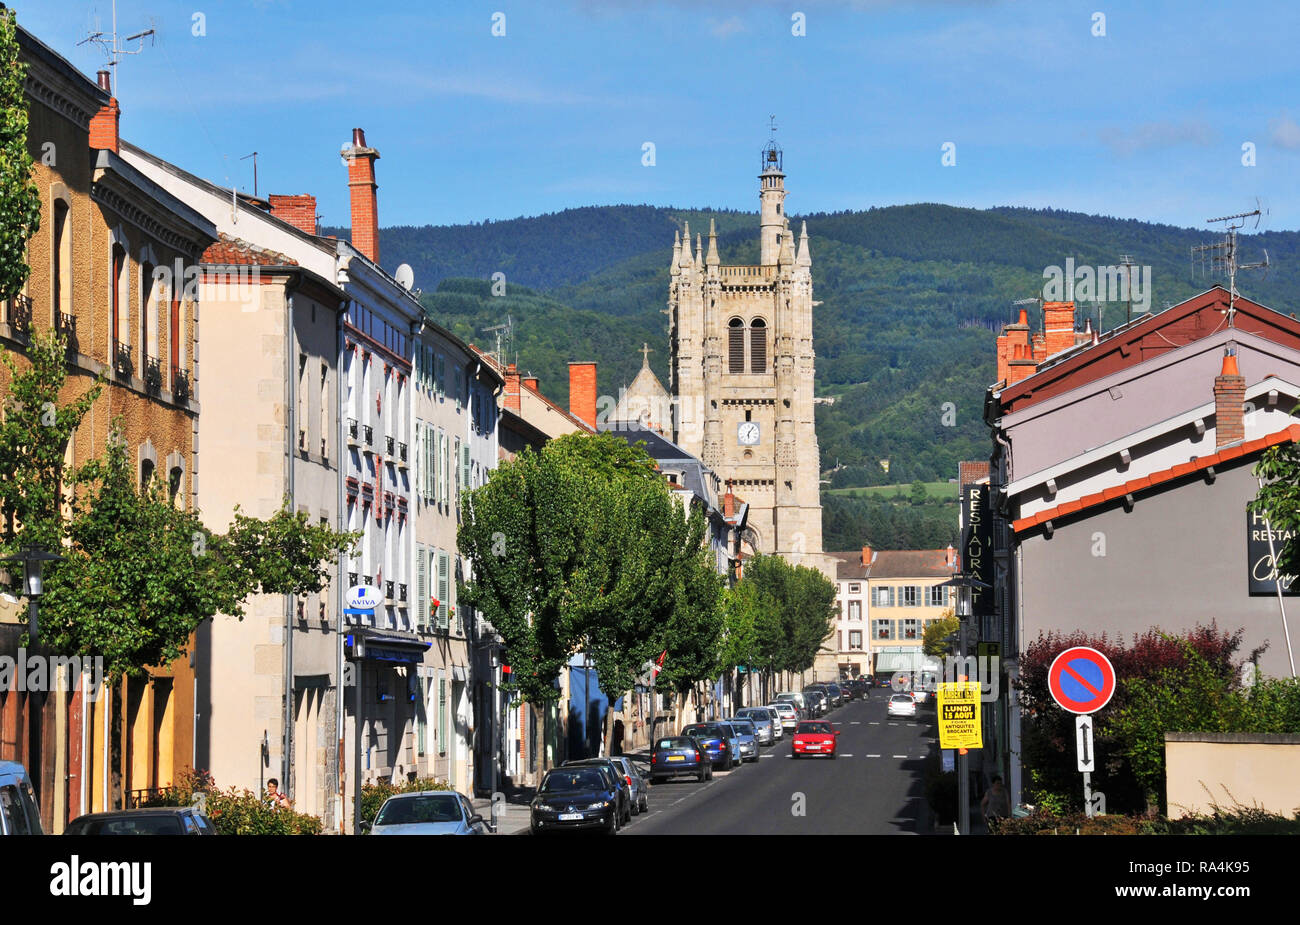 La calle principal de la ciudad de Ambert, Puy-de-Dôme, Livradois-Forez, Auvergne, Francia Foto de stock